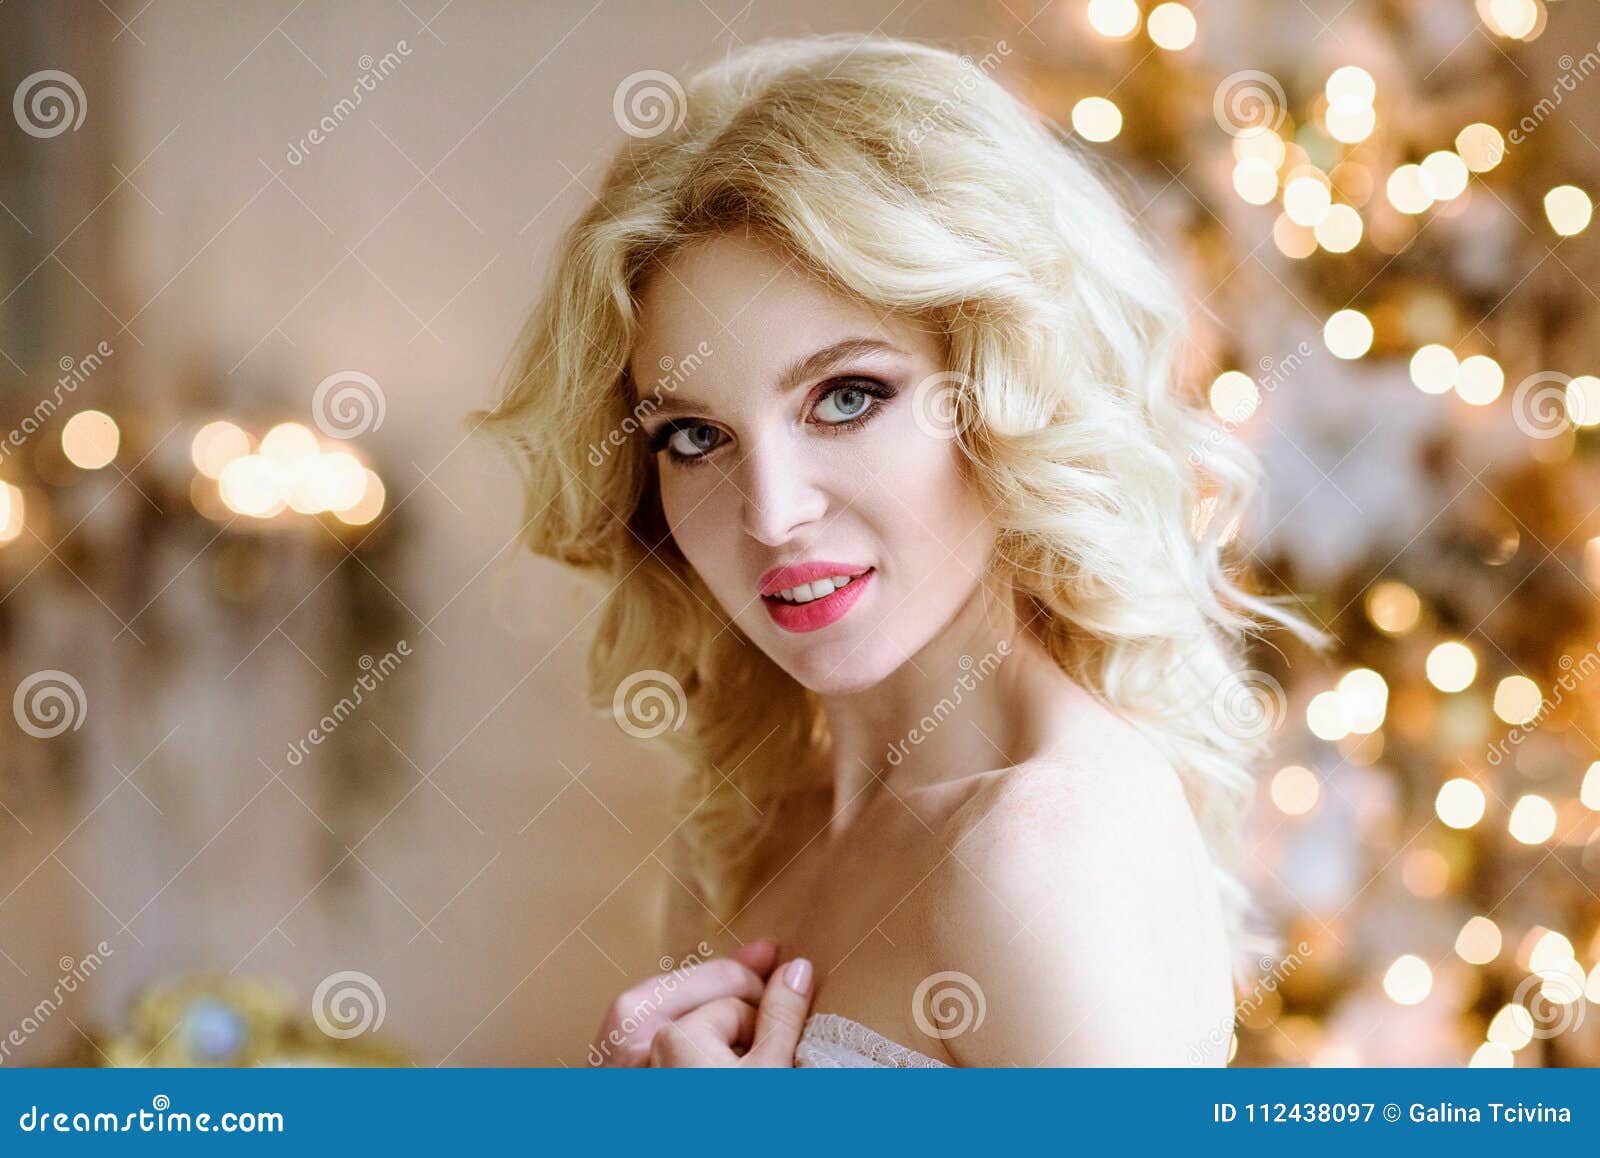 Female Portrait Of Cute Lady Indoors Stock Image Image Of Beautiful